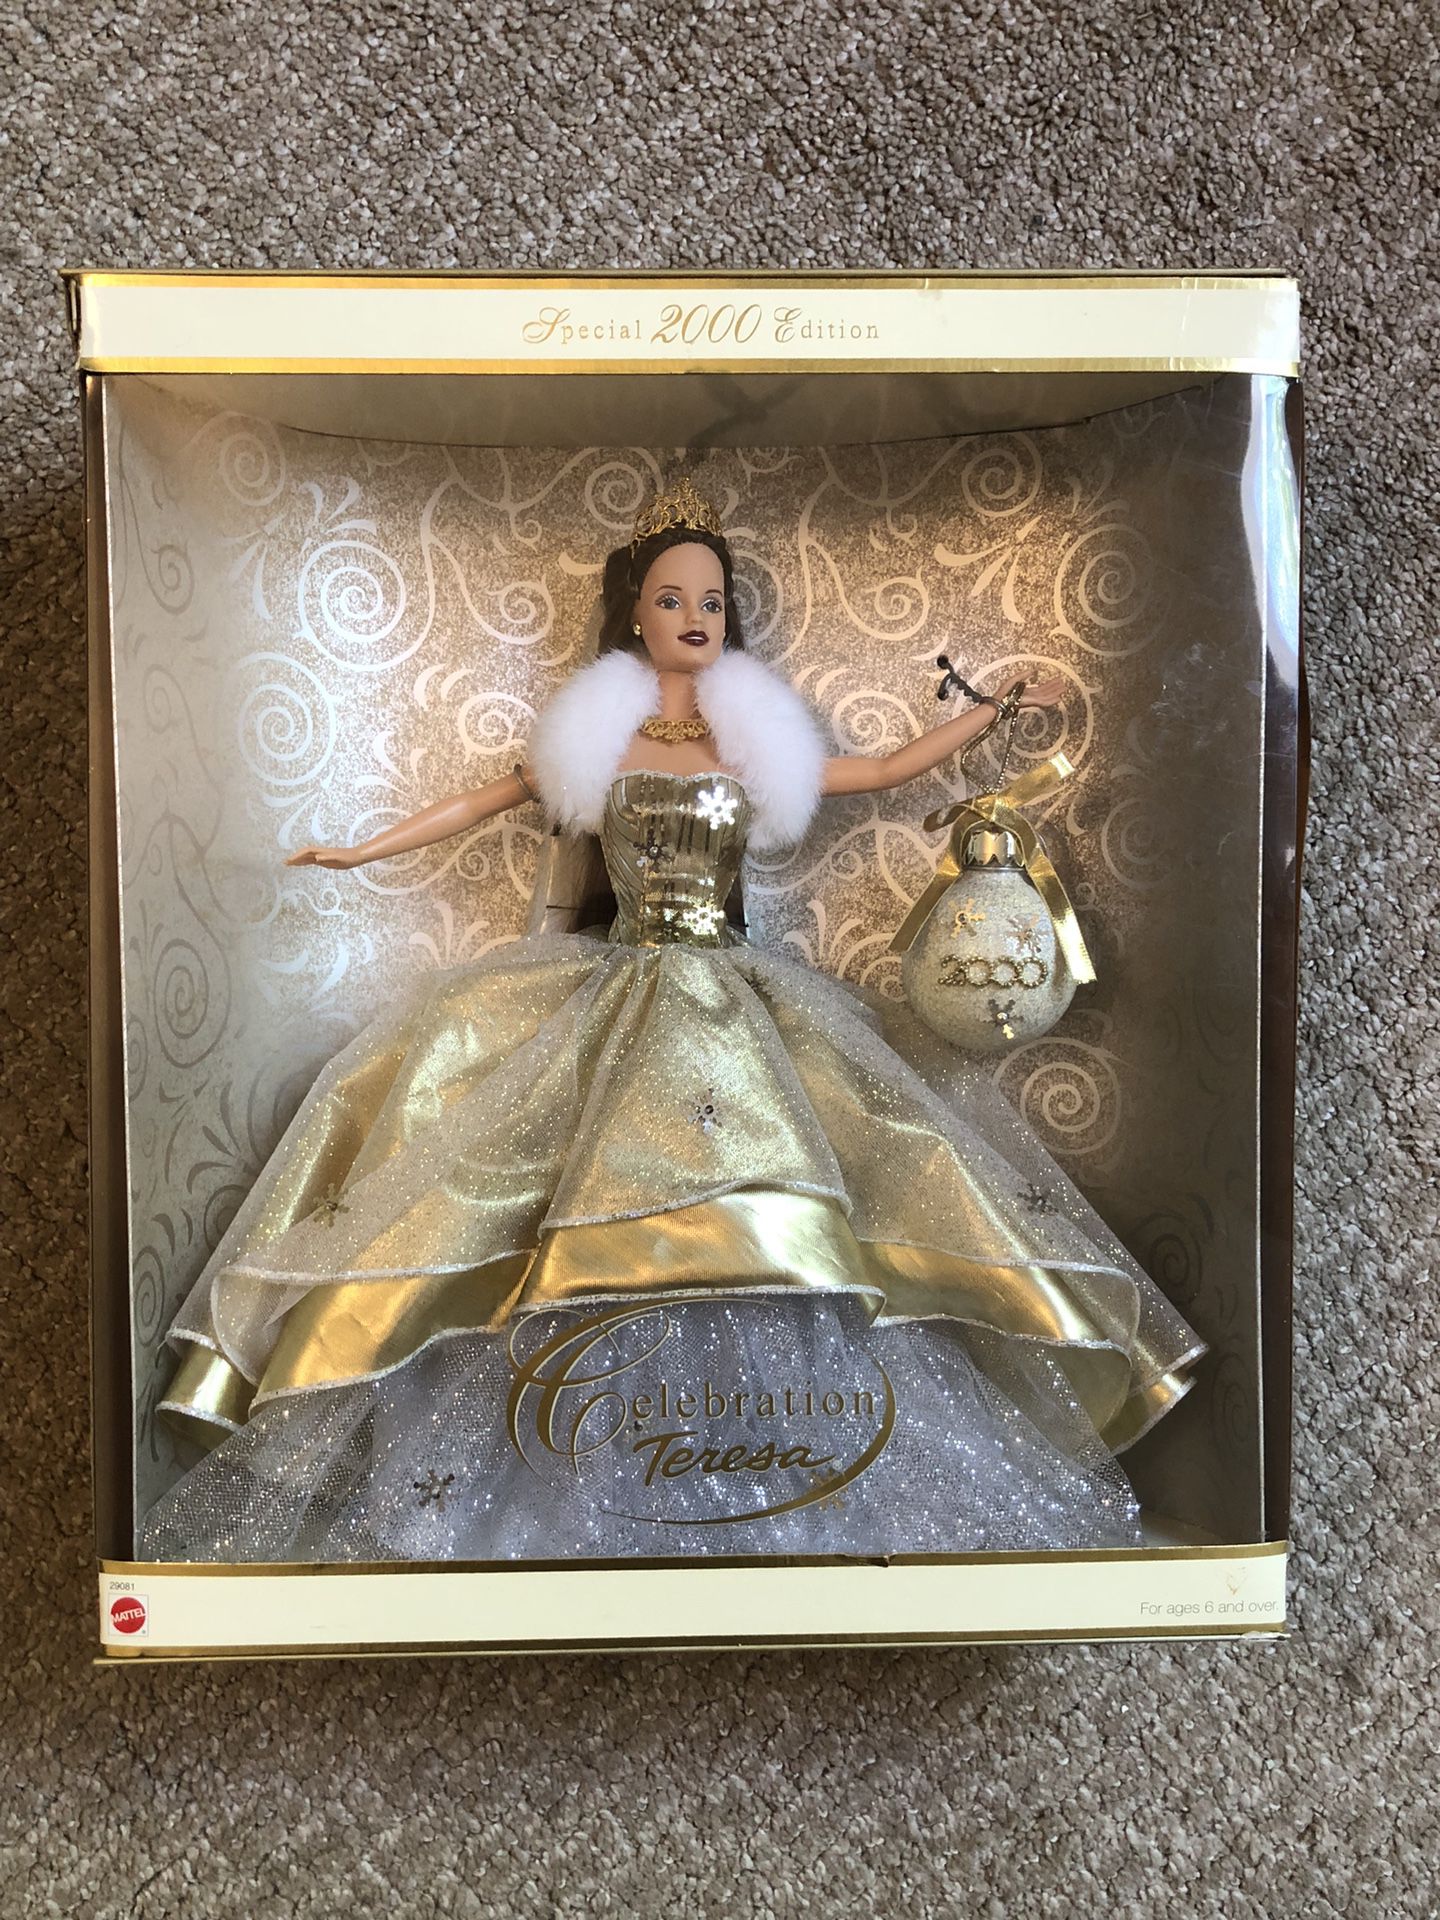 Celebration Teresa Special 2000 Edition Barbie